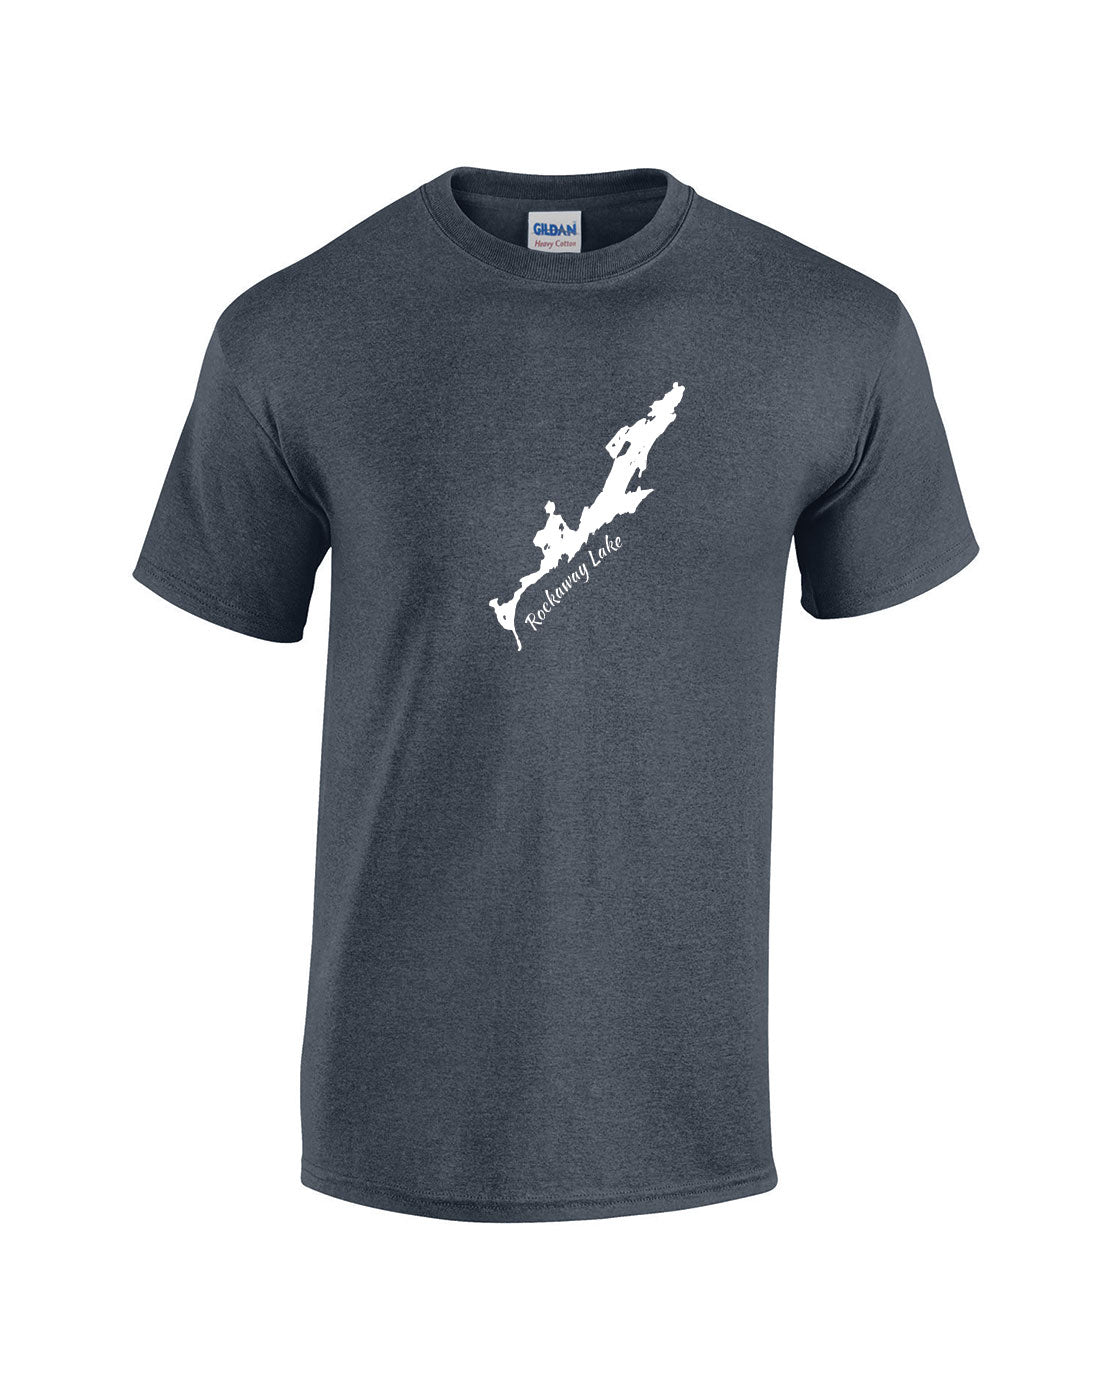 Rockaway Lake T-Shirt